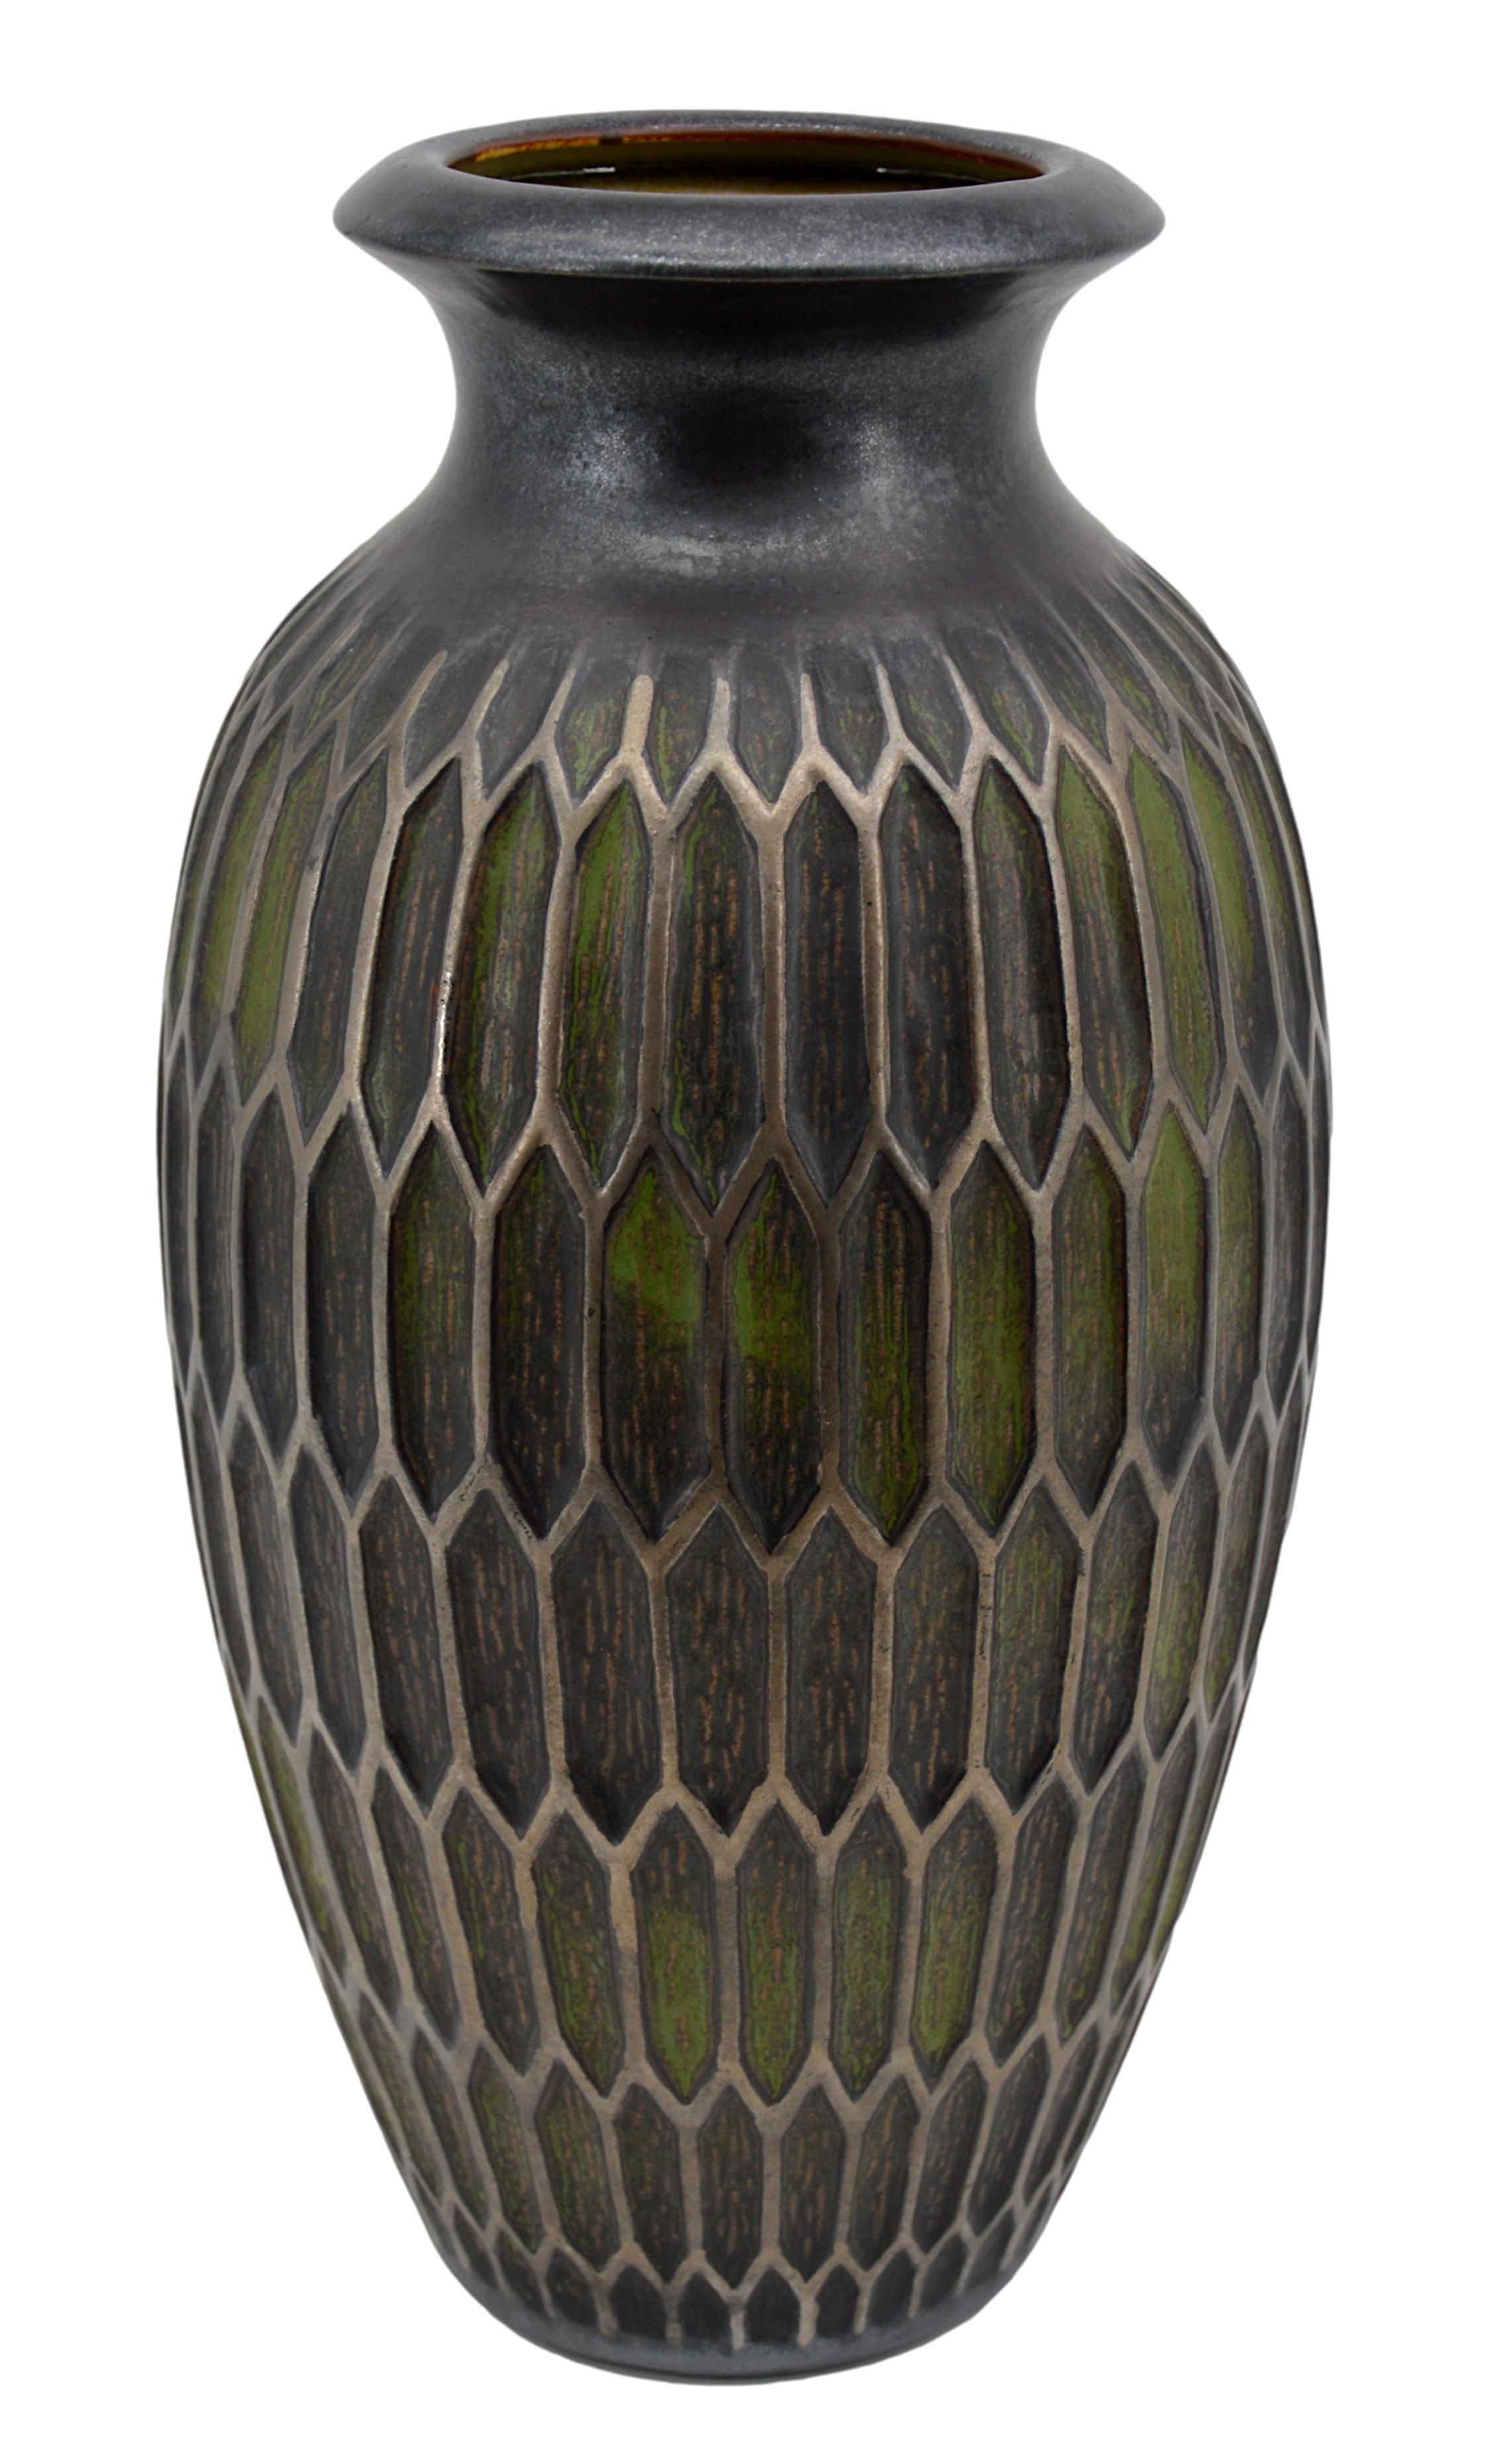 French Art Deco vase by Joseph Mougin (1876-1961), Nancy, France, late 1920s. Model by Joseph Mougin named 